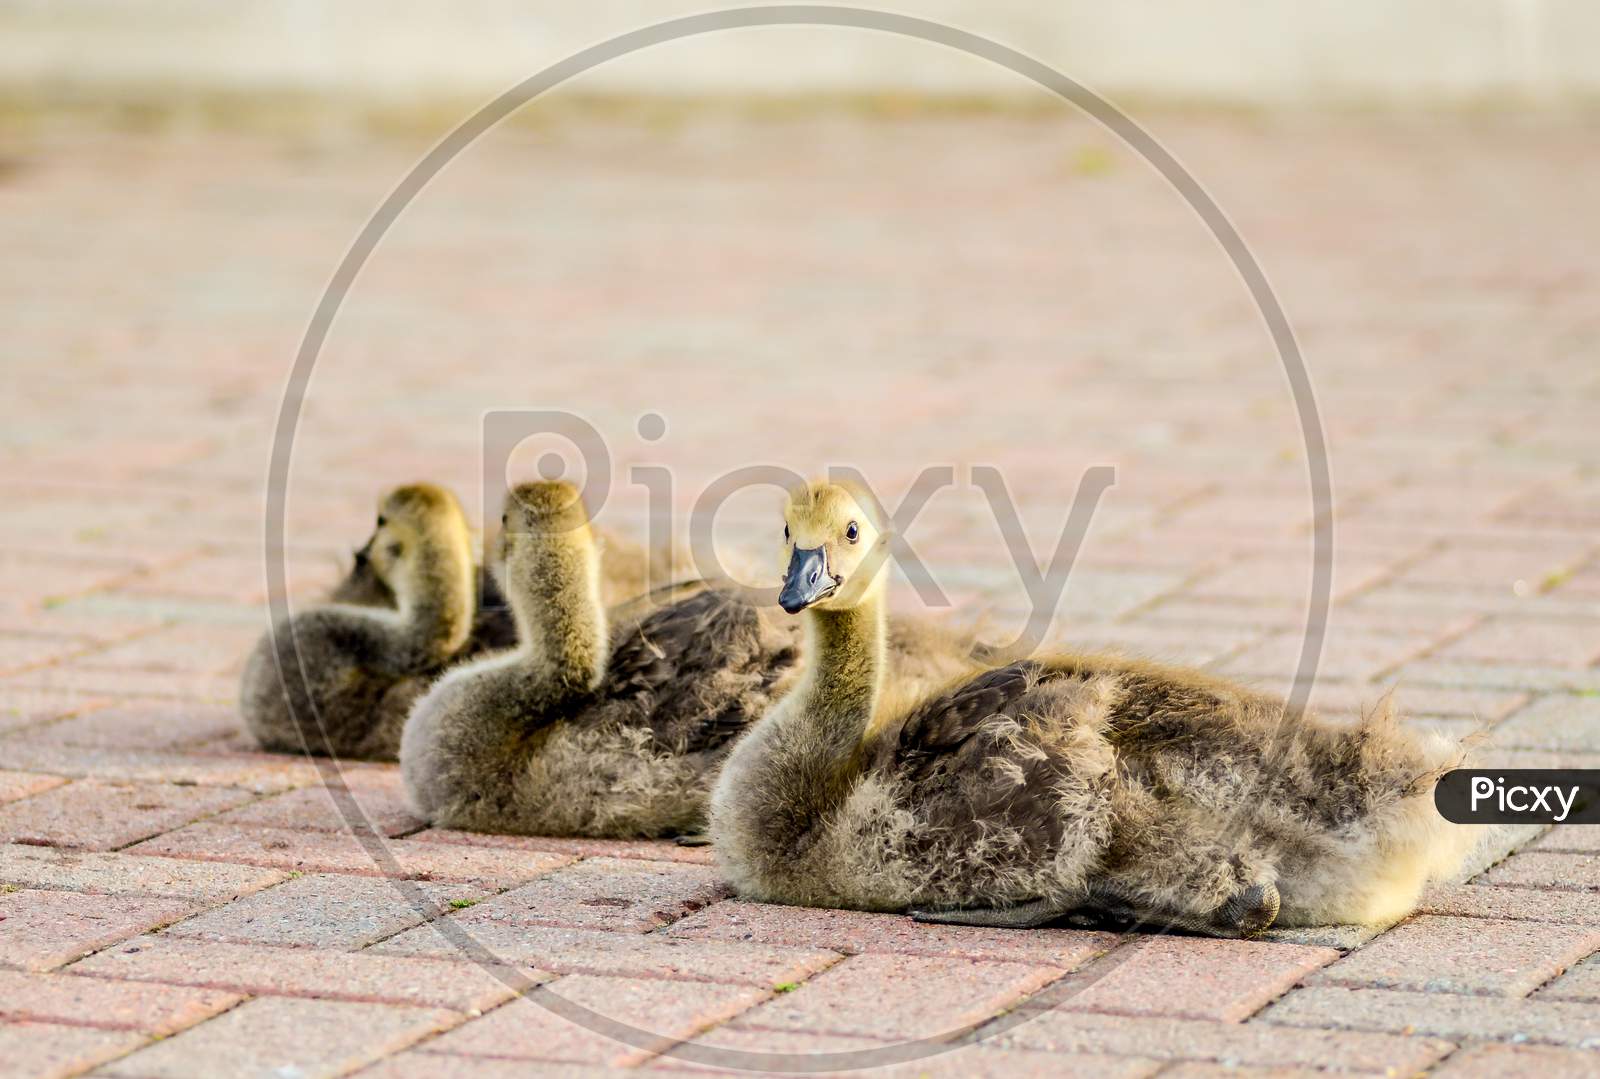 Three baby ducks sitting on a floor